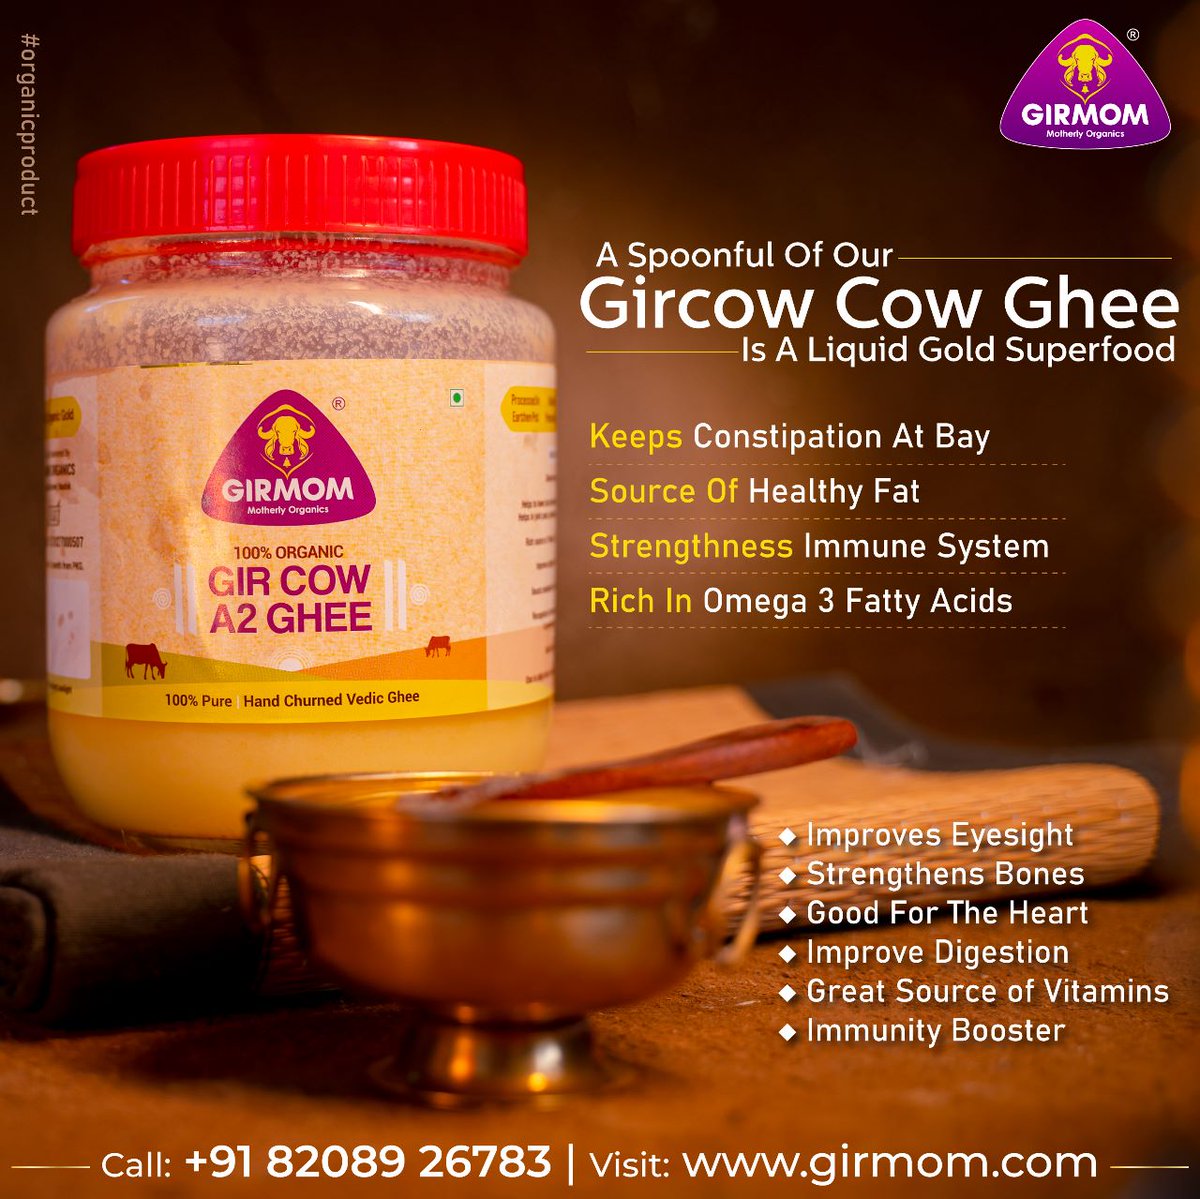 A spoonful of our Gircow cow ghee is a liquid gold superfood.
Buy Girmom Vedic Ghee, Available On Amazon & Flipkart.
#girmom #ghee #cowghee #desighee #vedicghee #bilonaghee #organicghee #gircowghee #gircow #girmomorganics